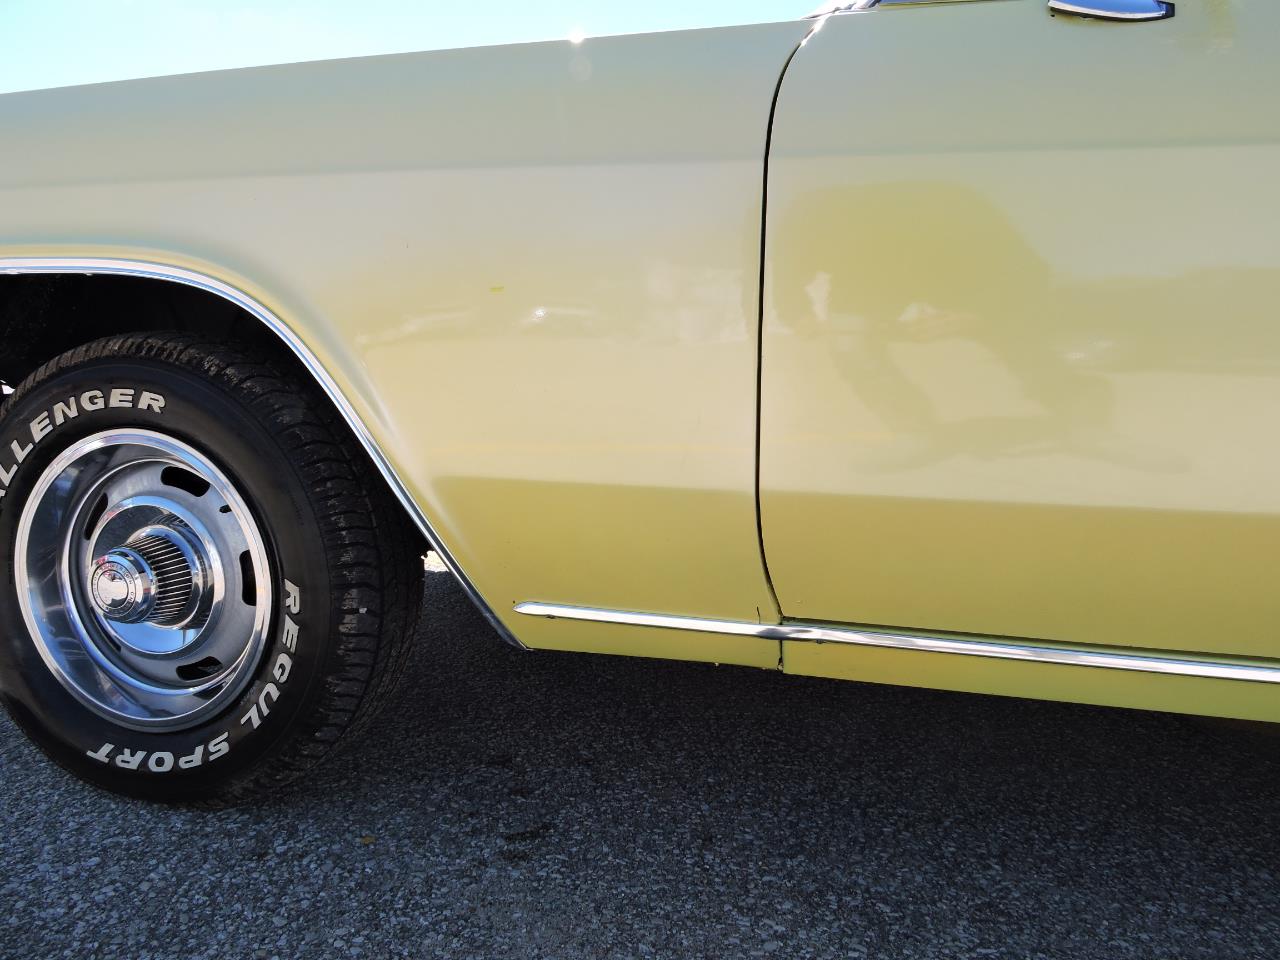 1966 Chevrolet Impala for sale in Greene, IA – photo 70